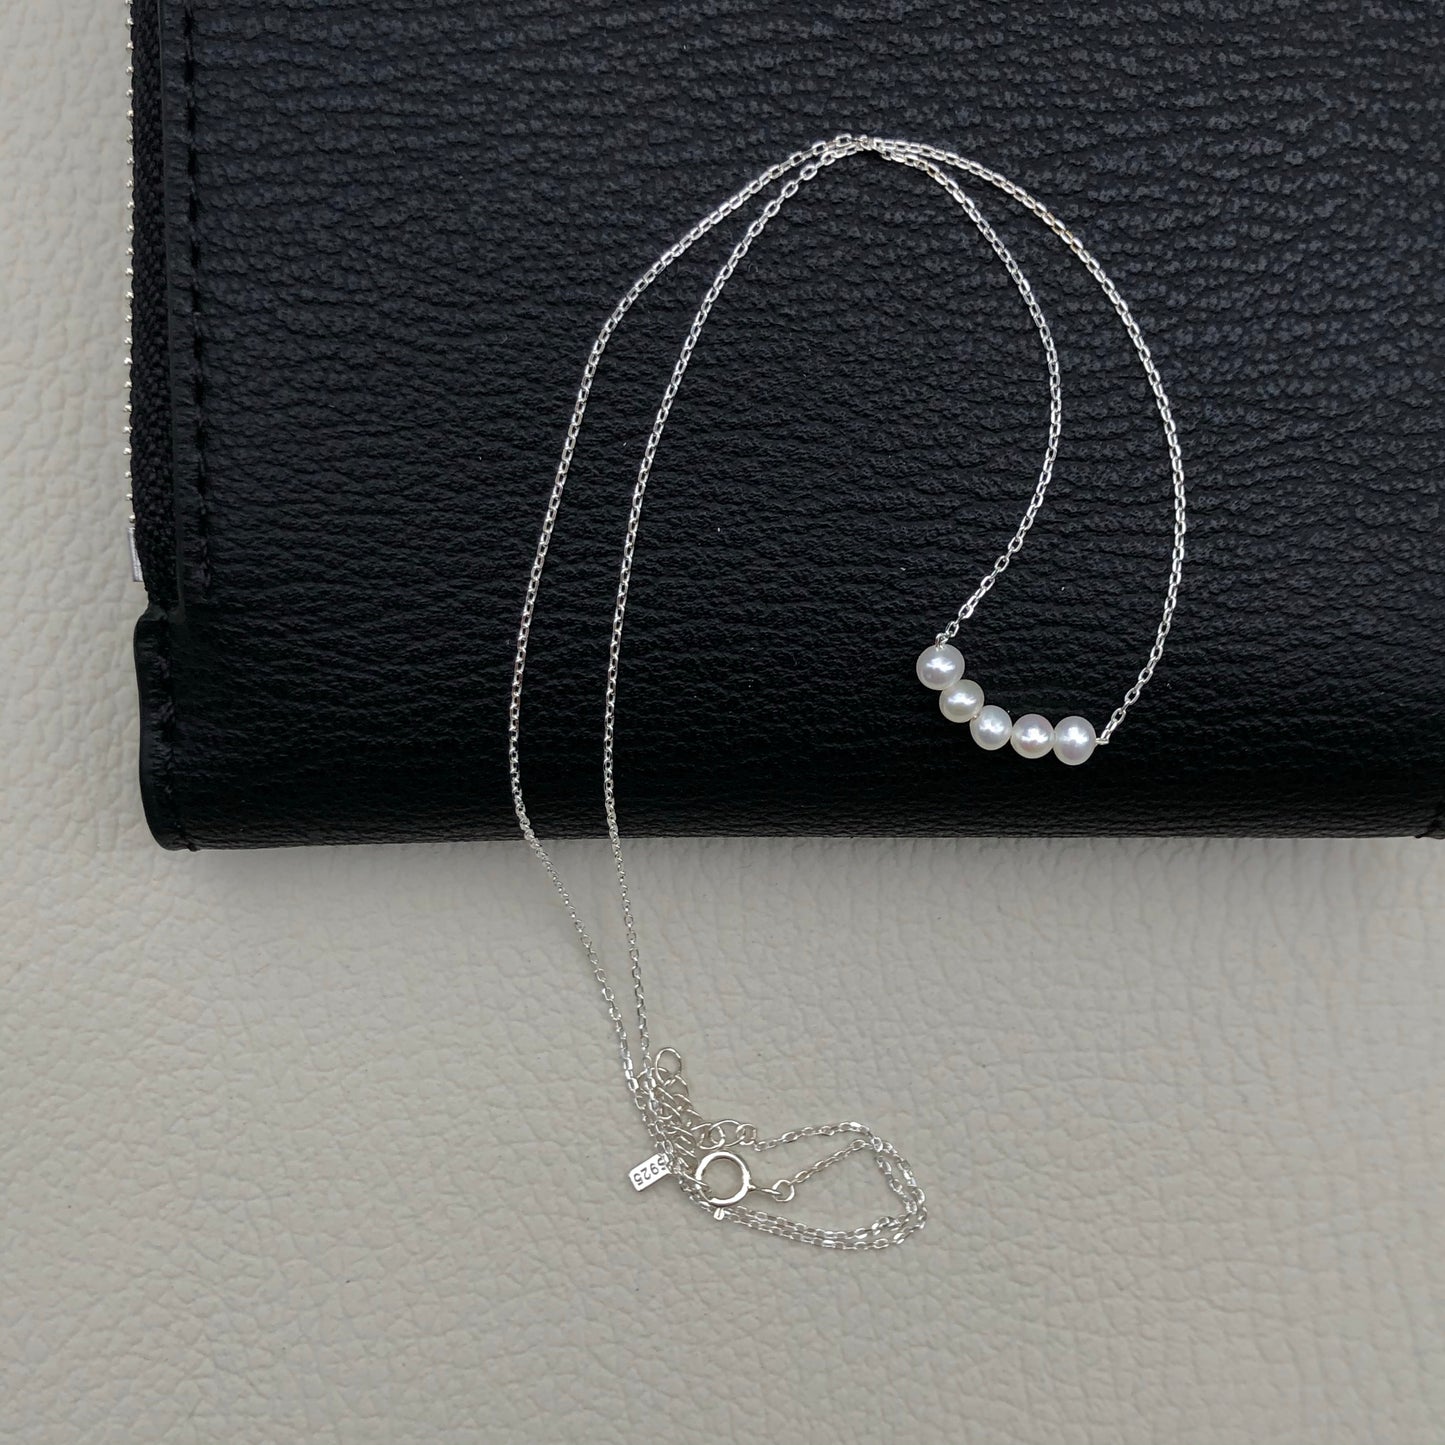 Tricia Pearl Necklace in Silver